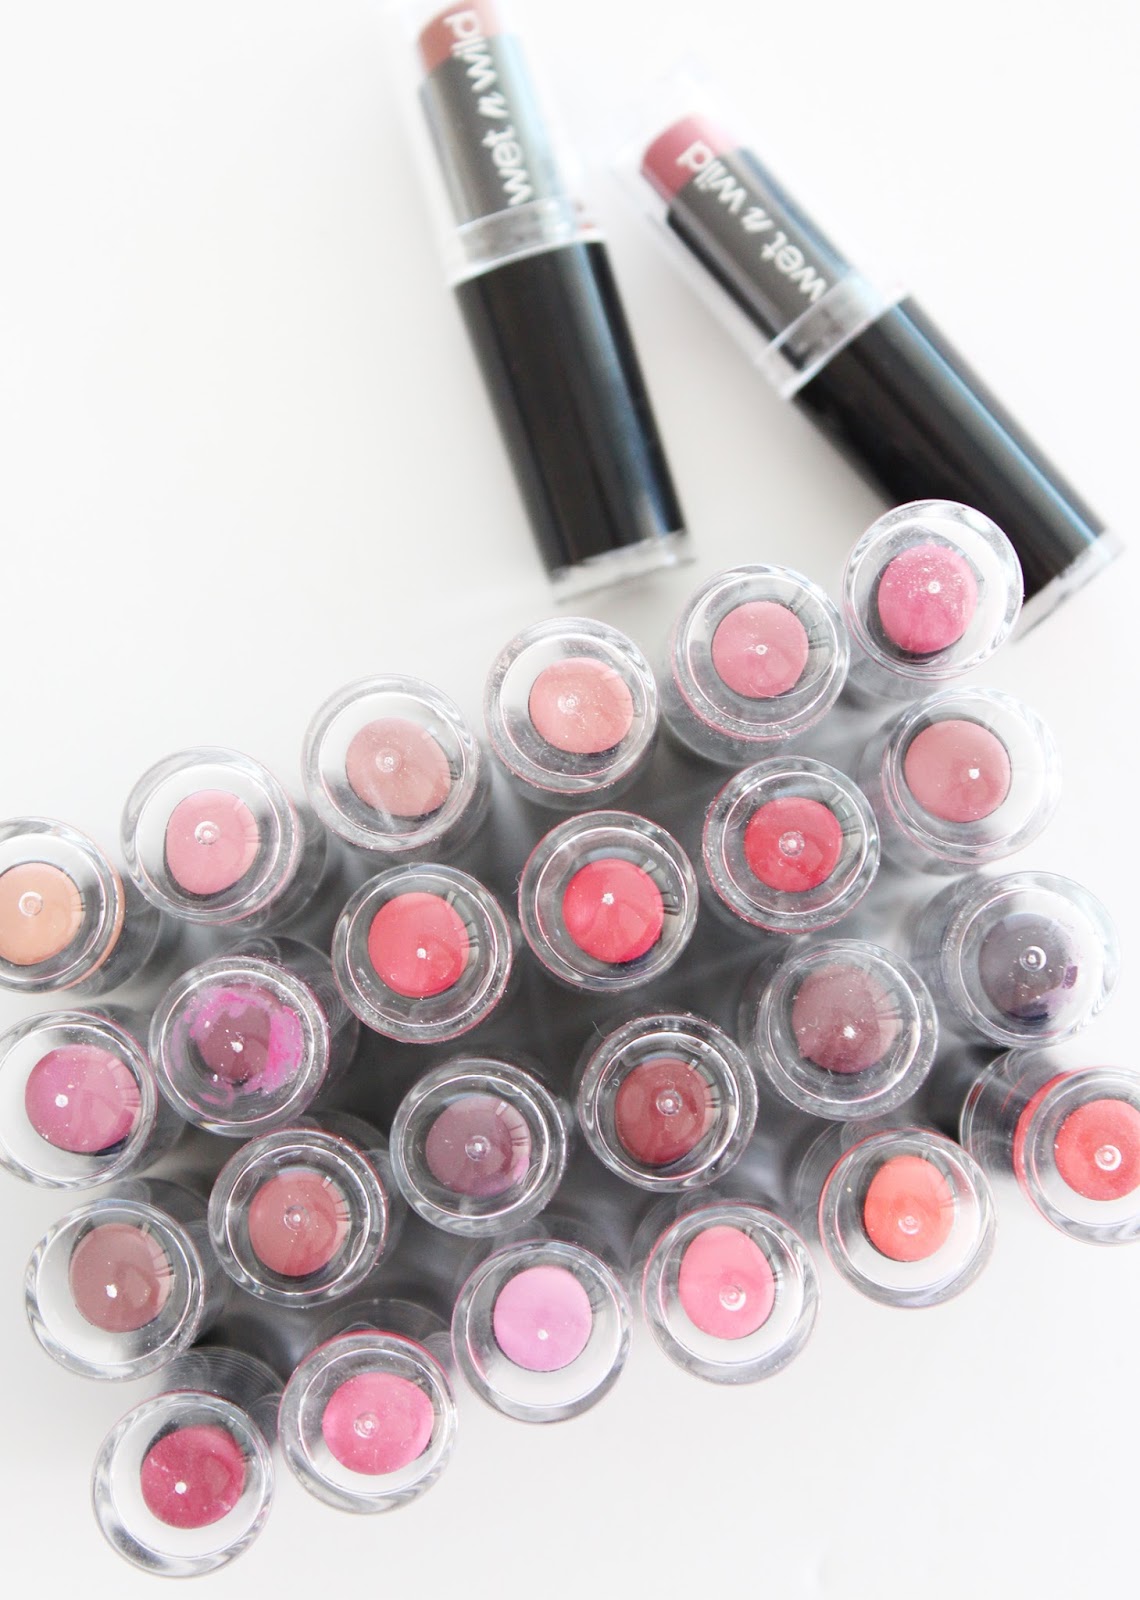 WET N WILD | MegaLast Lipsticks - Complete 26 Shade Collection + Swatches - CassandraMyee